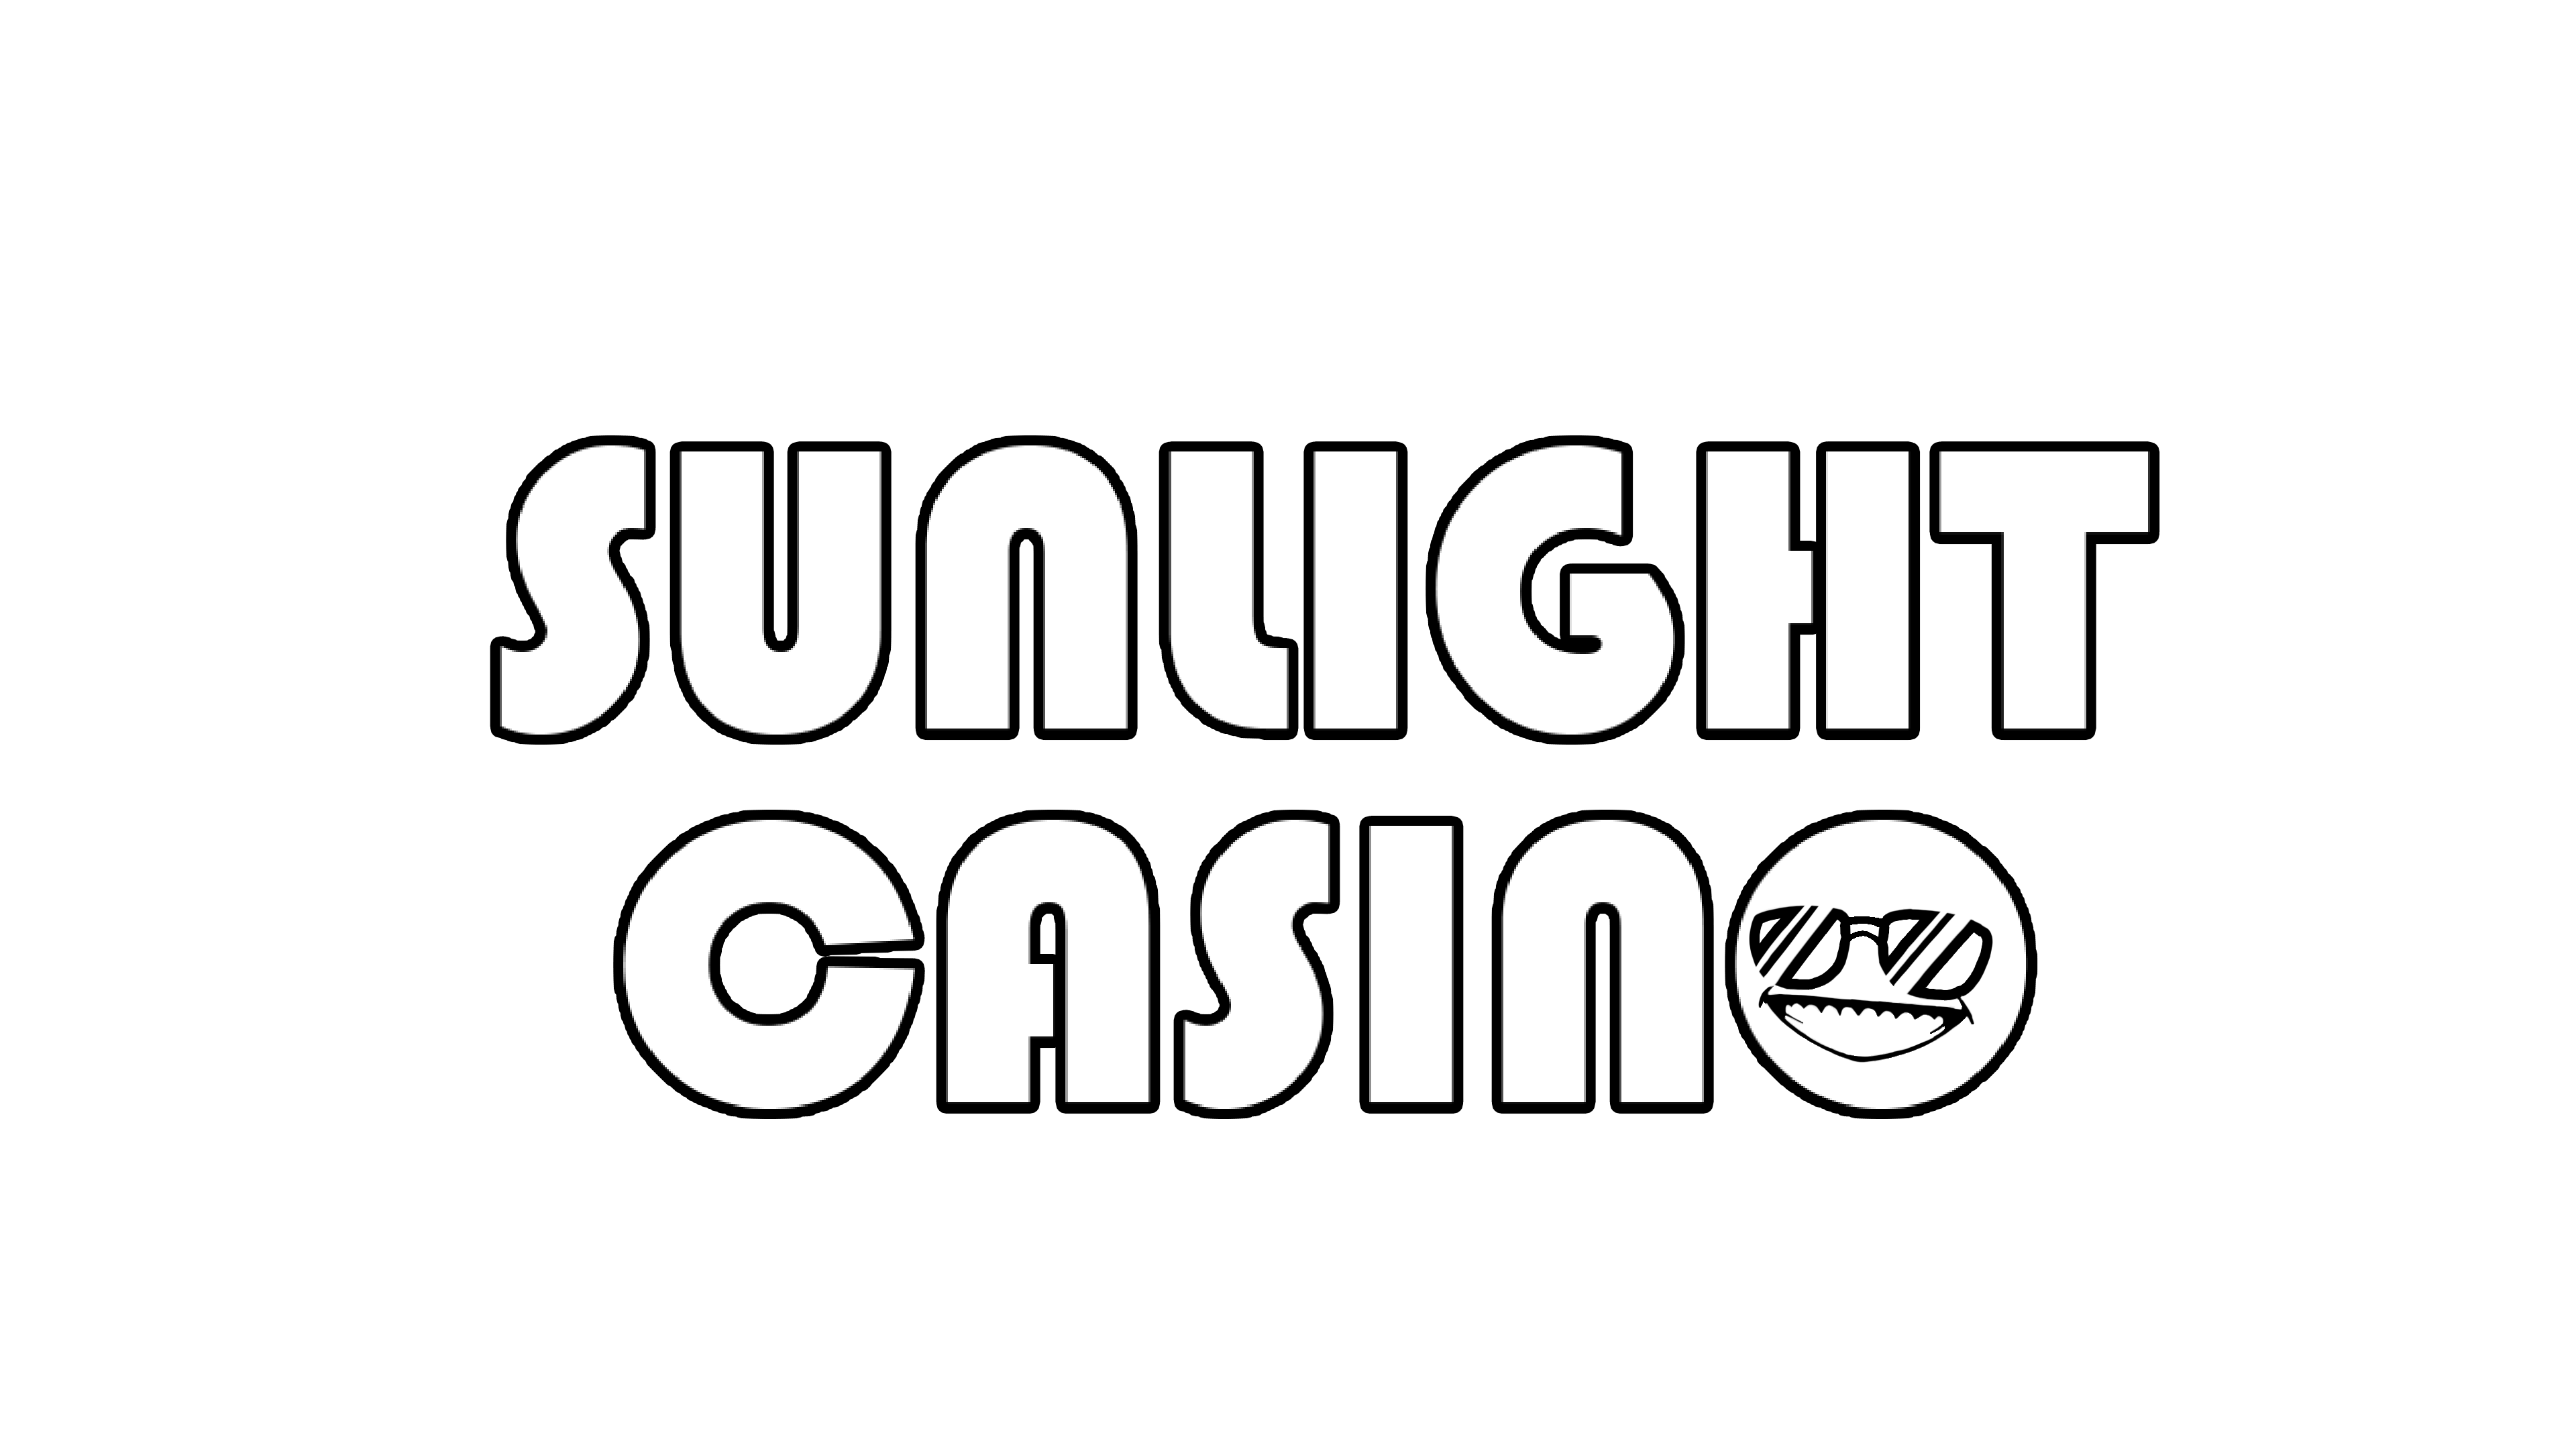 Sunlight casino